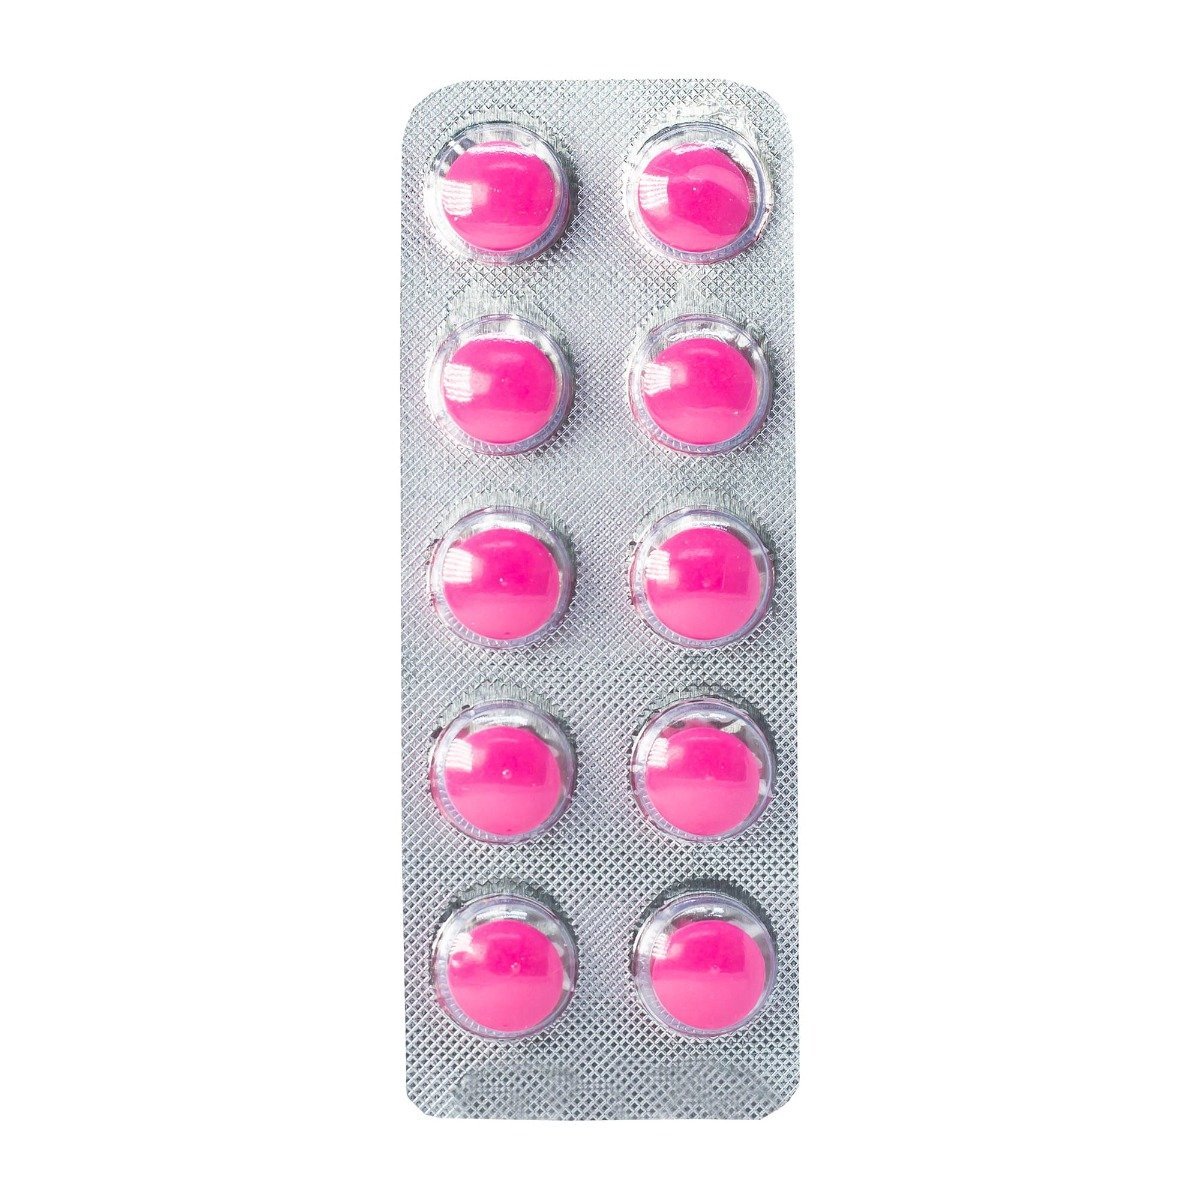 Brufen 200 mg - 30 Tablets - Bloom Pharmacy